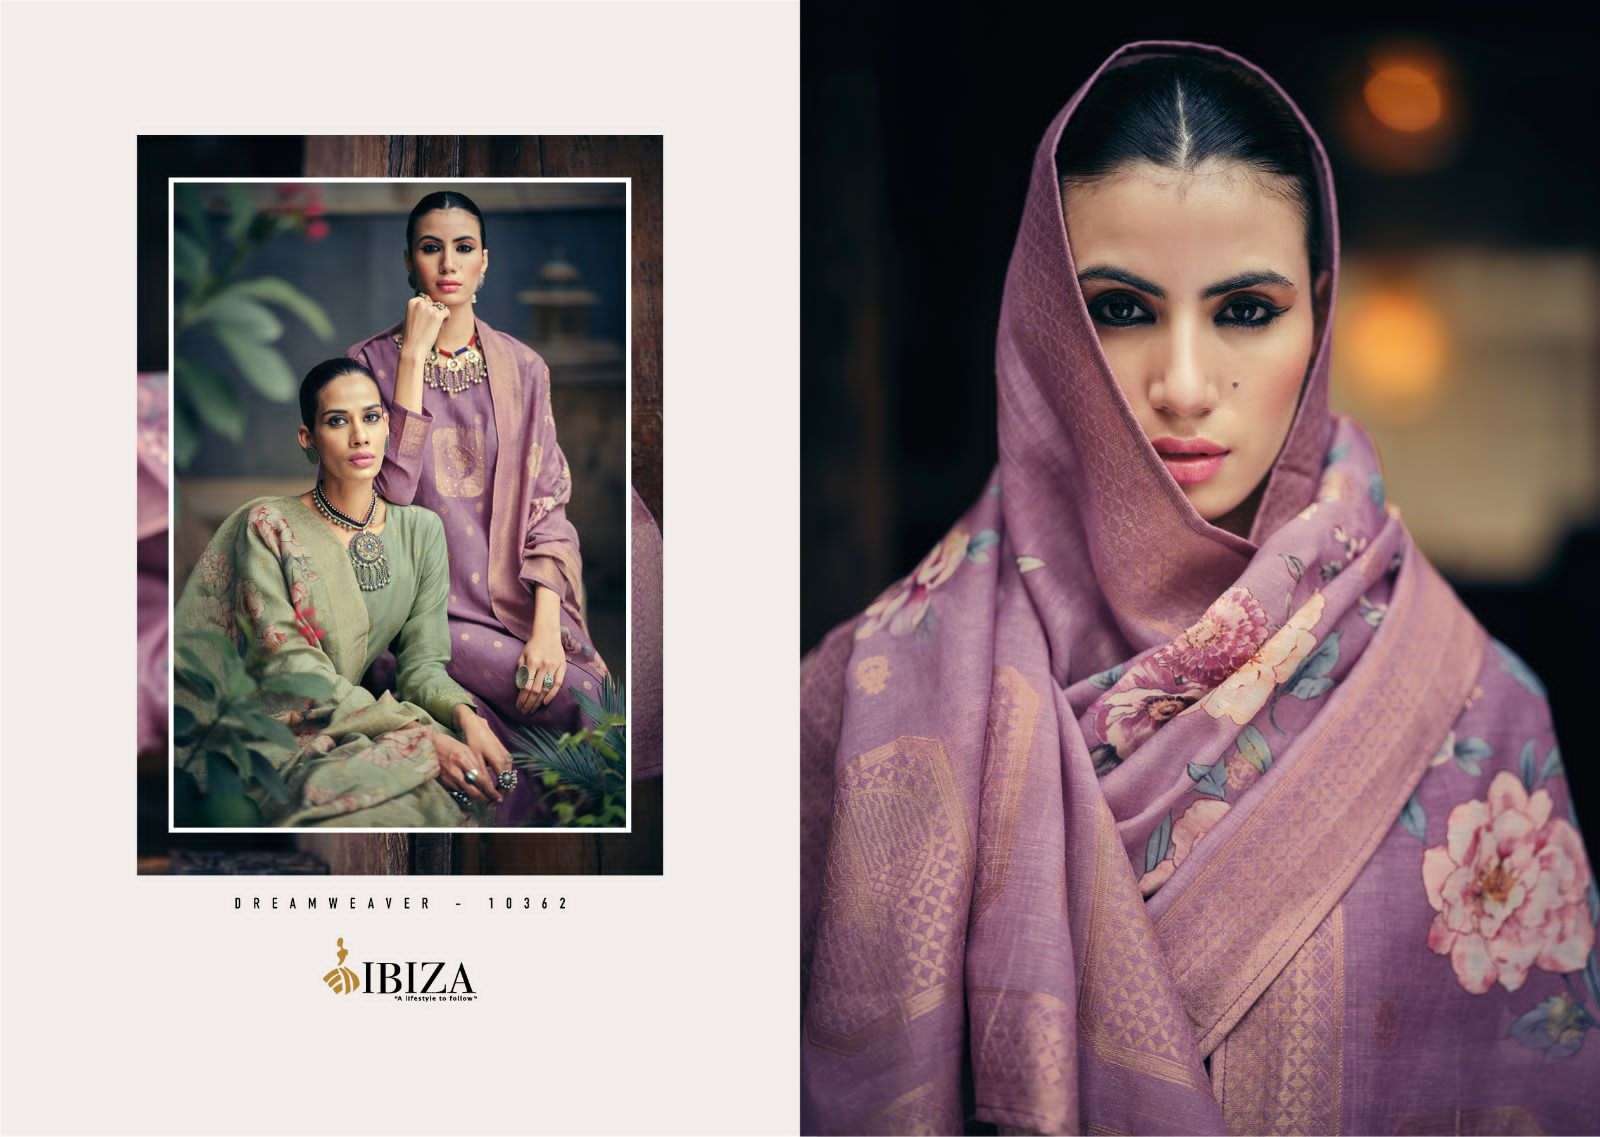 ibiza ellena 10355-10362 series exclusive designer salwar kameez catalogue online supplier surat 